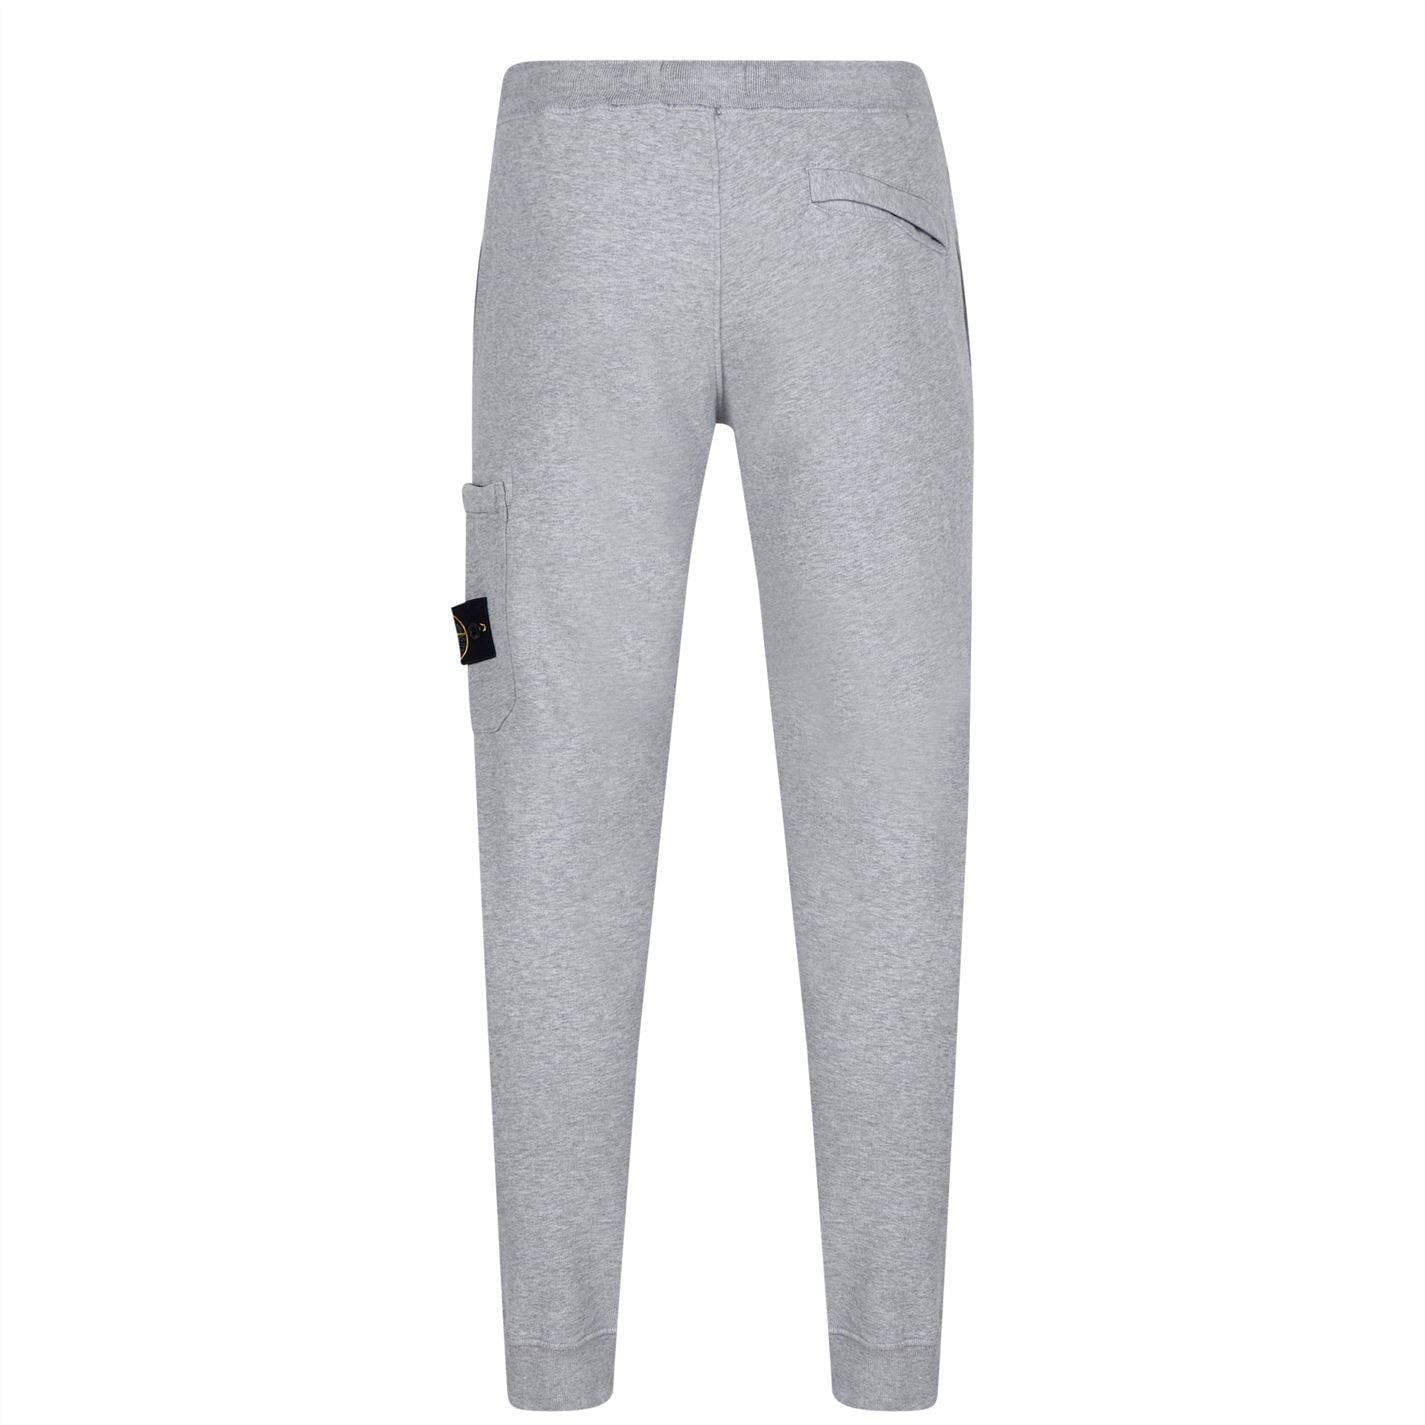 Stone Island Grey Cuffed Sweatpants - DANYOUNGUK